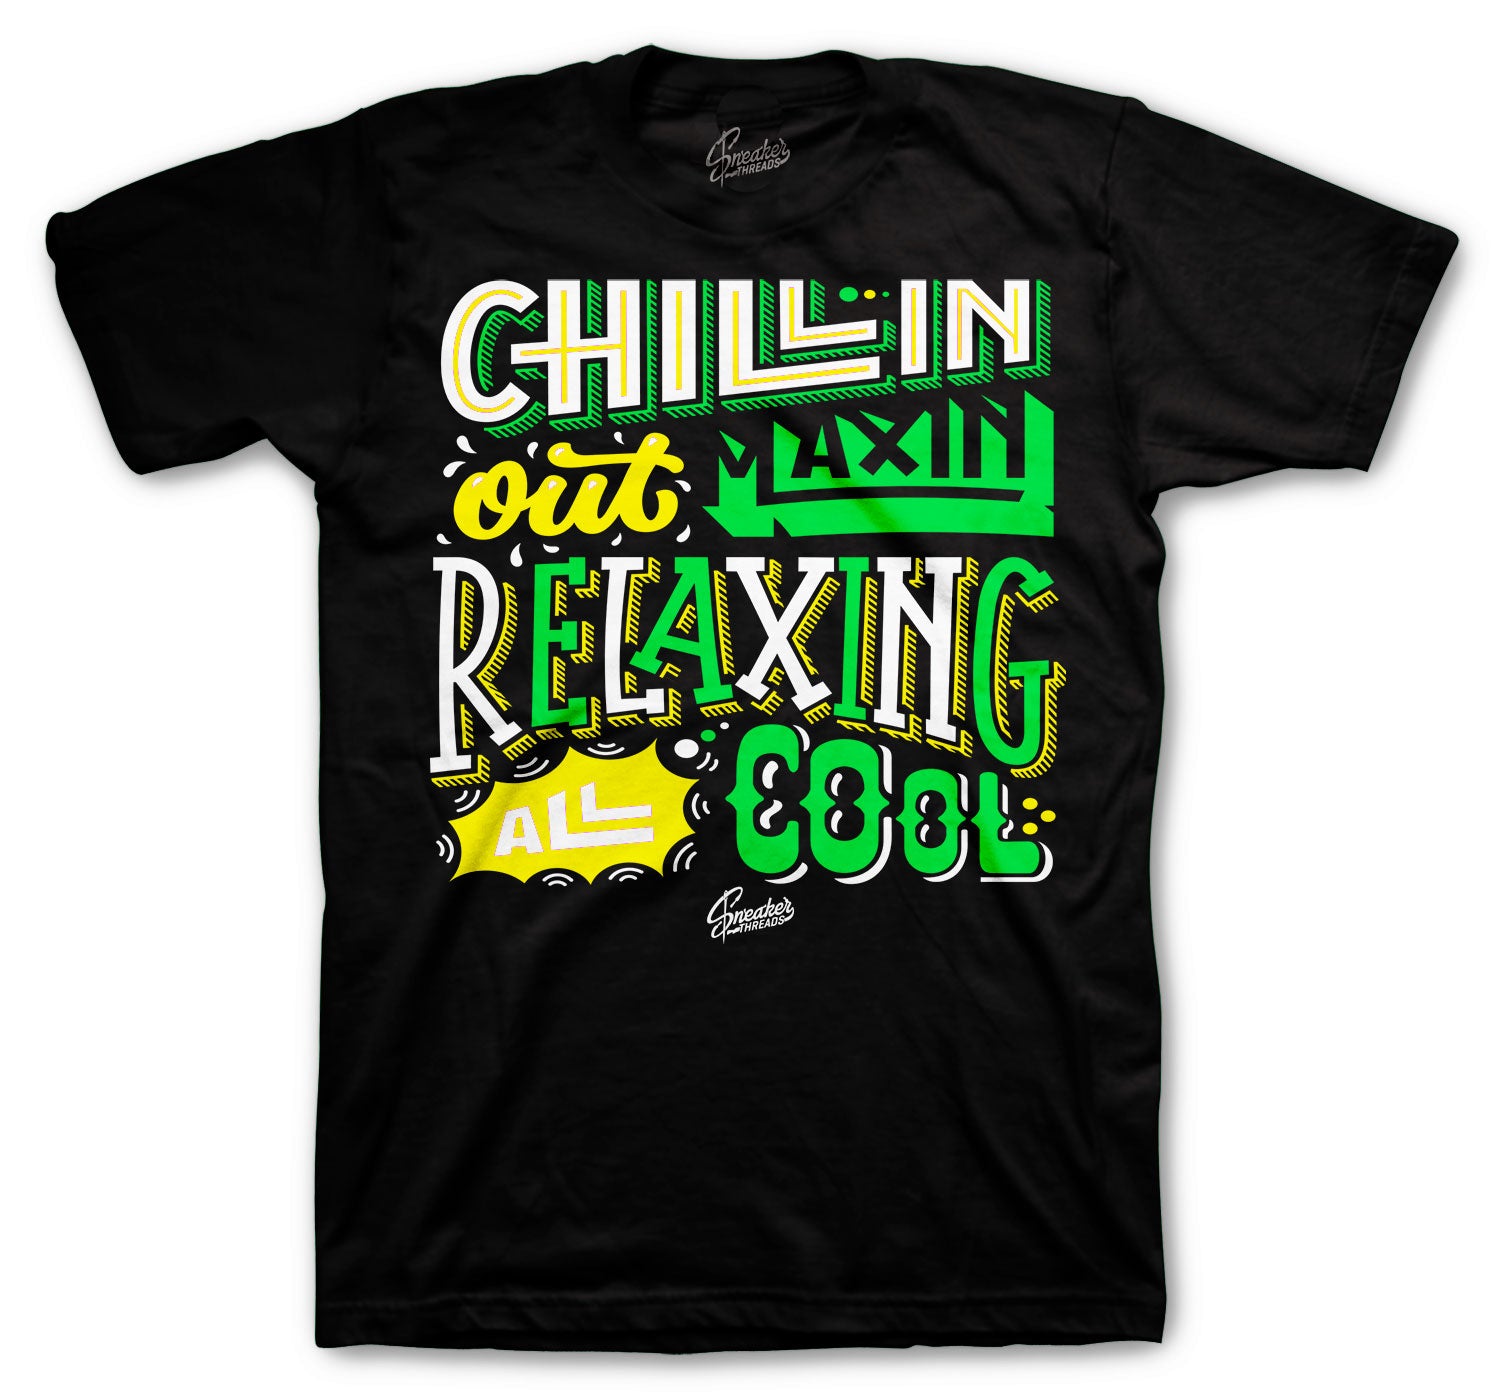 Retro 5 Oregon Shirt - Chillin - Black